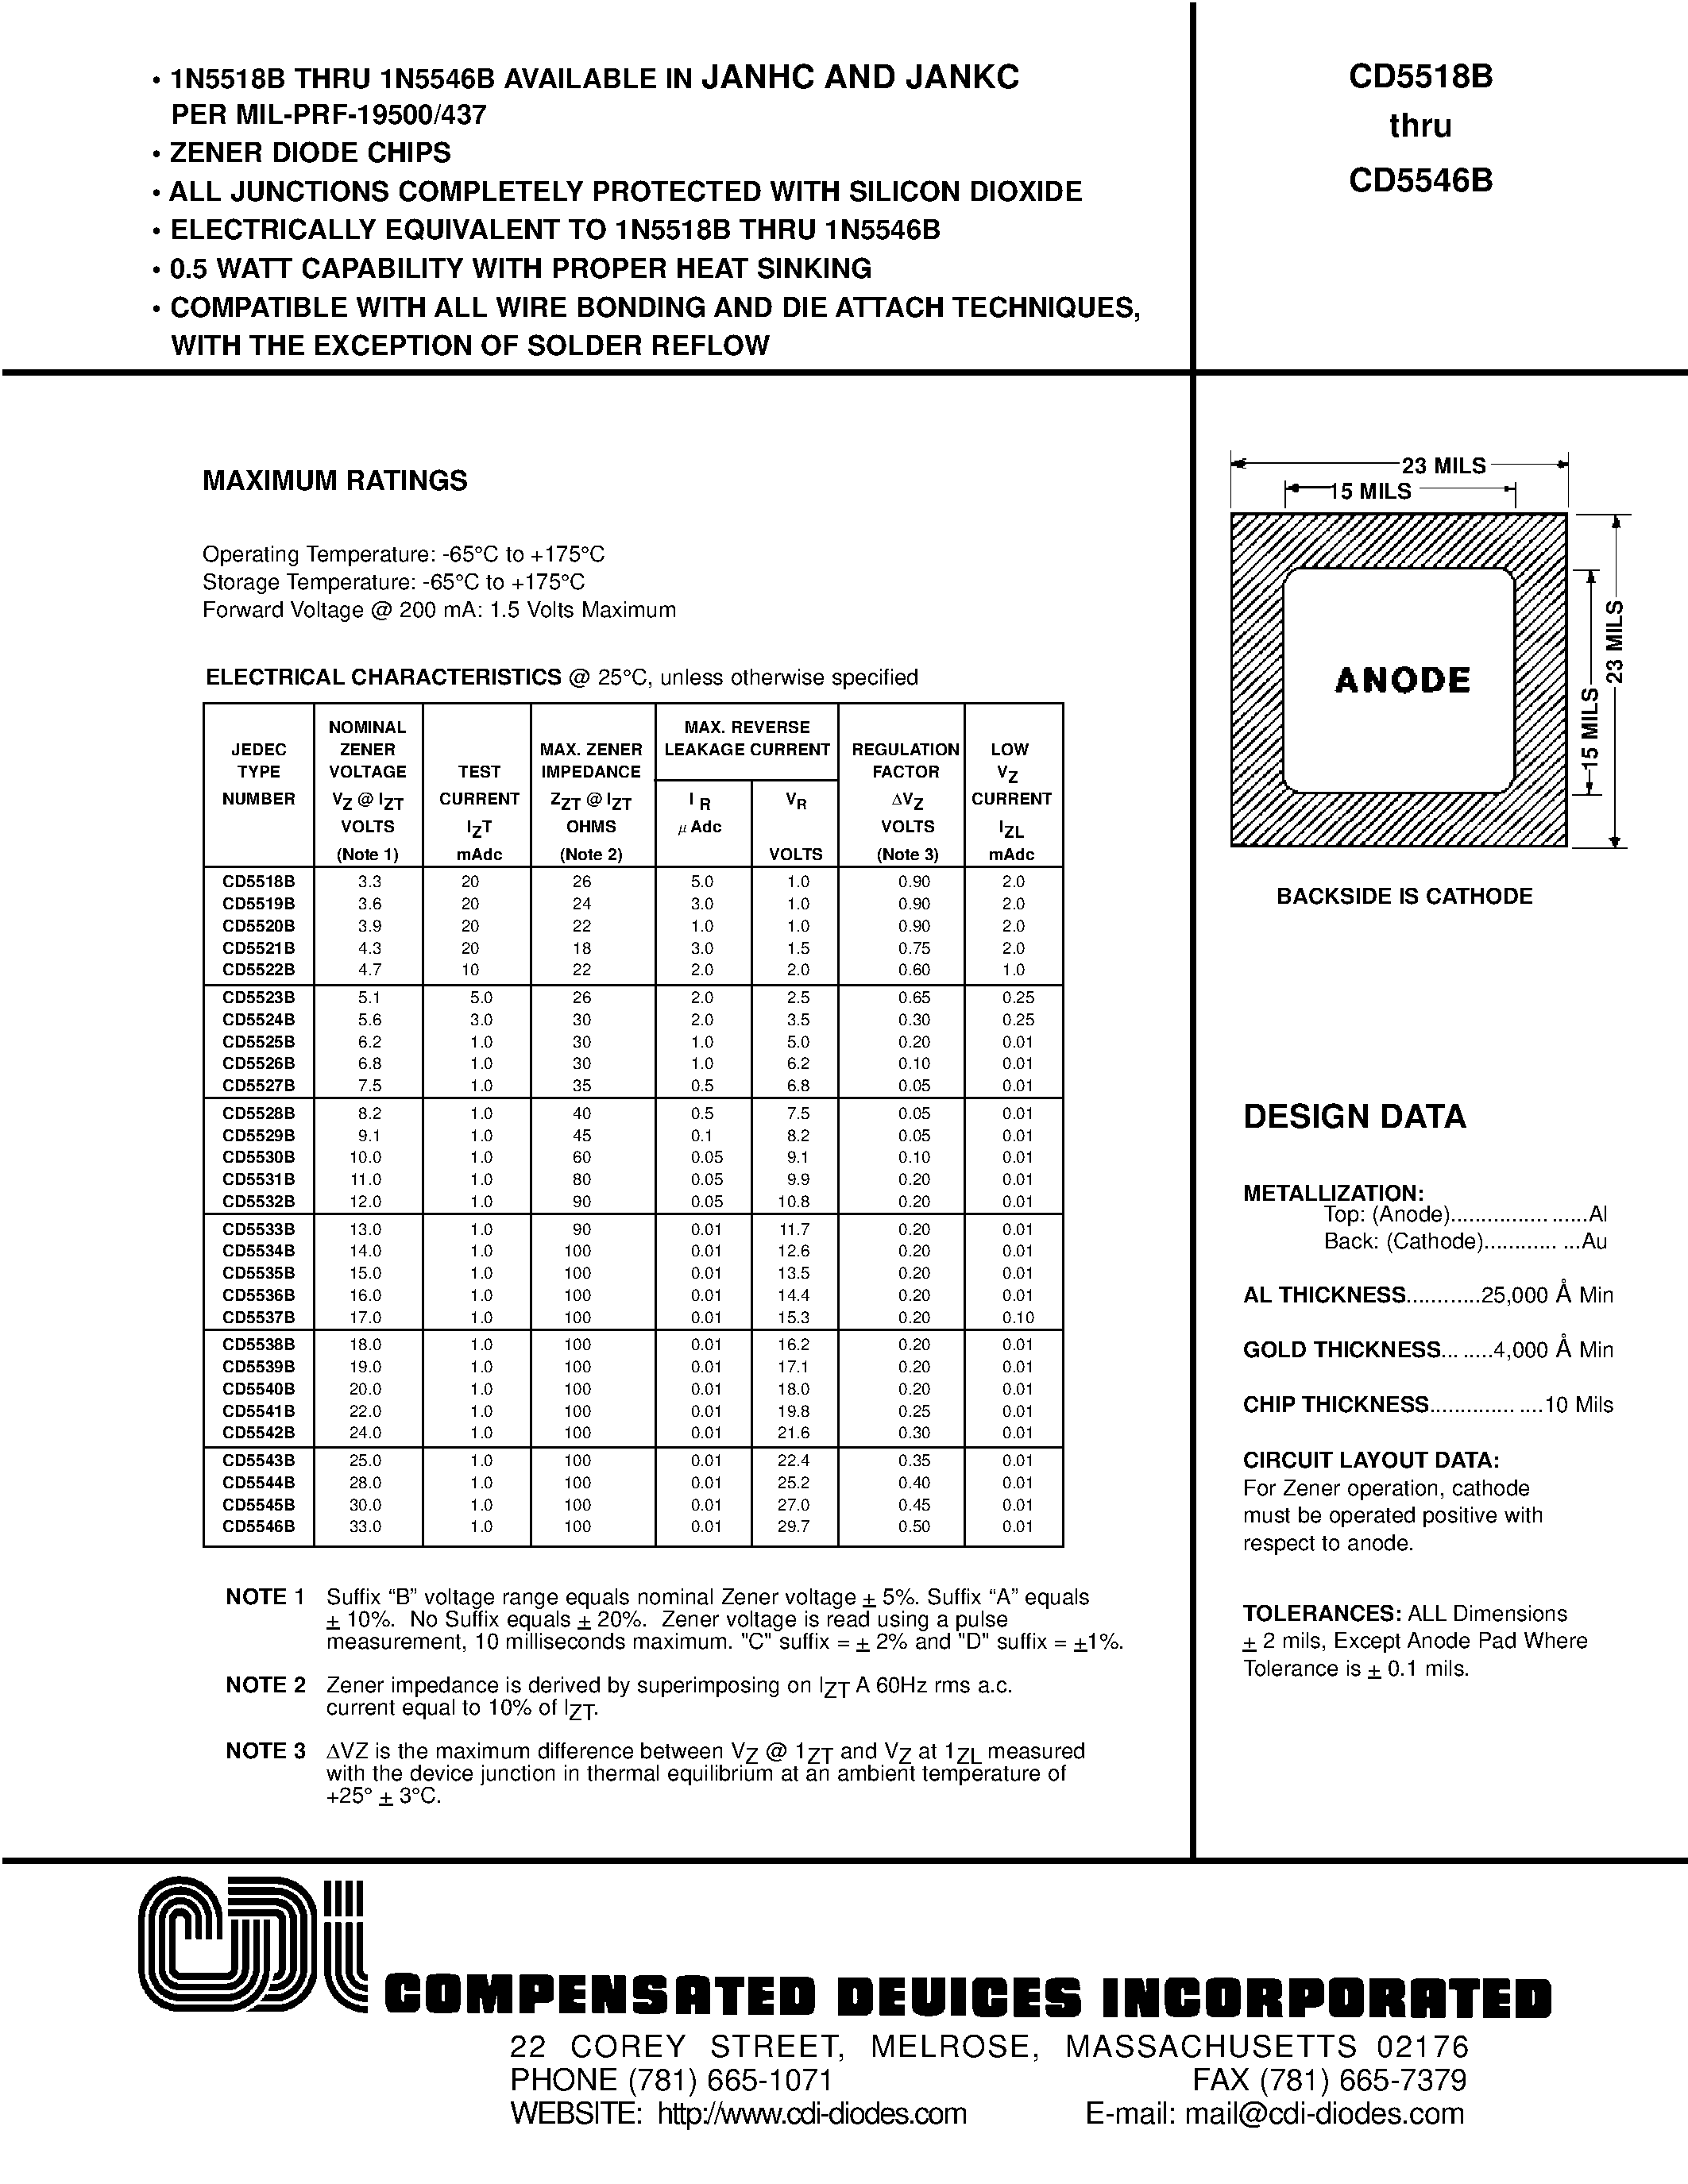 Datasheet CD5530B - ZENER DIODE CHIPS page 1